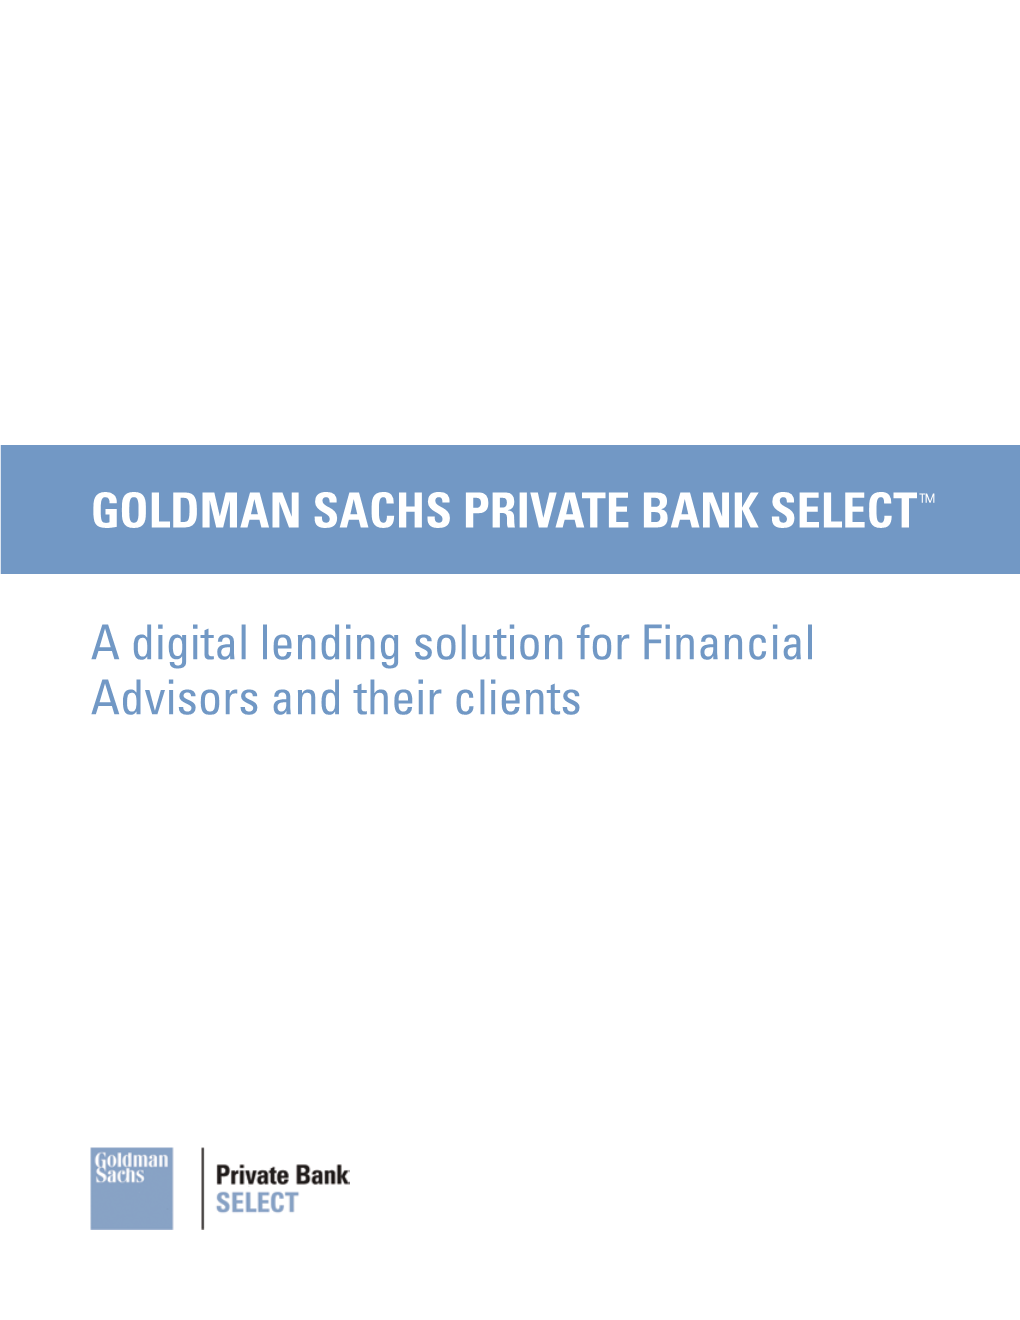 GOLDMAN SACHS PRIVATE BANK SELECT™ a Digital Lending